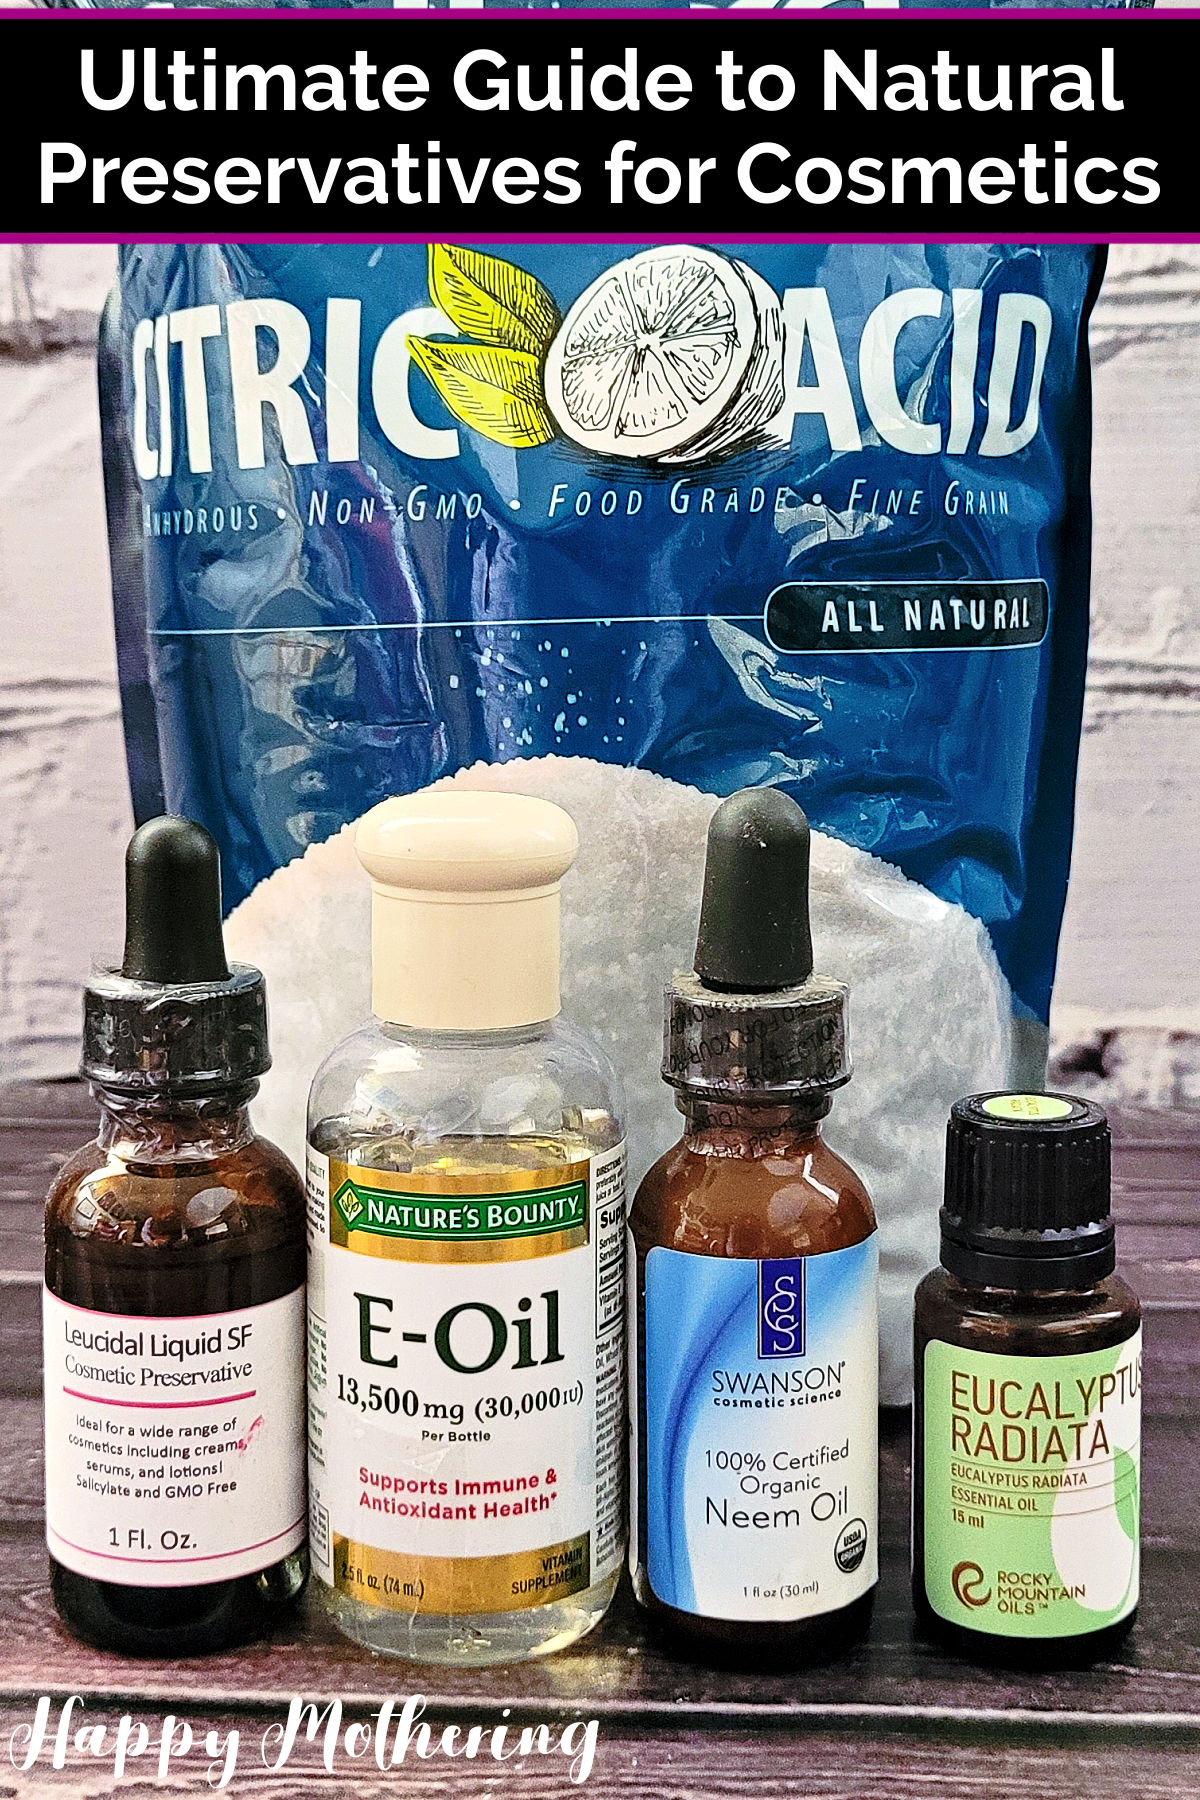 Bag of citrus acid behind bottles of leucidal liquid SF, Vitamin E Oil, Neem oil and Eucalyptus essential oils on a dark wood table.